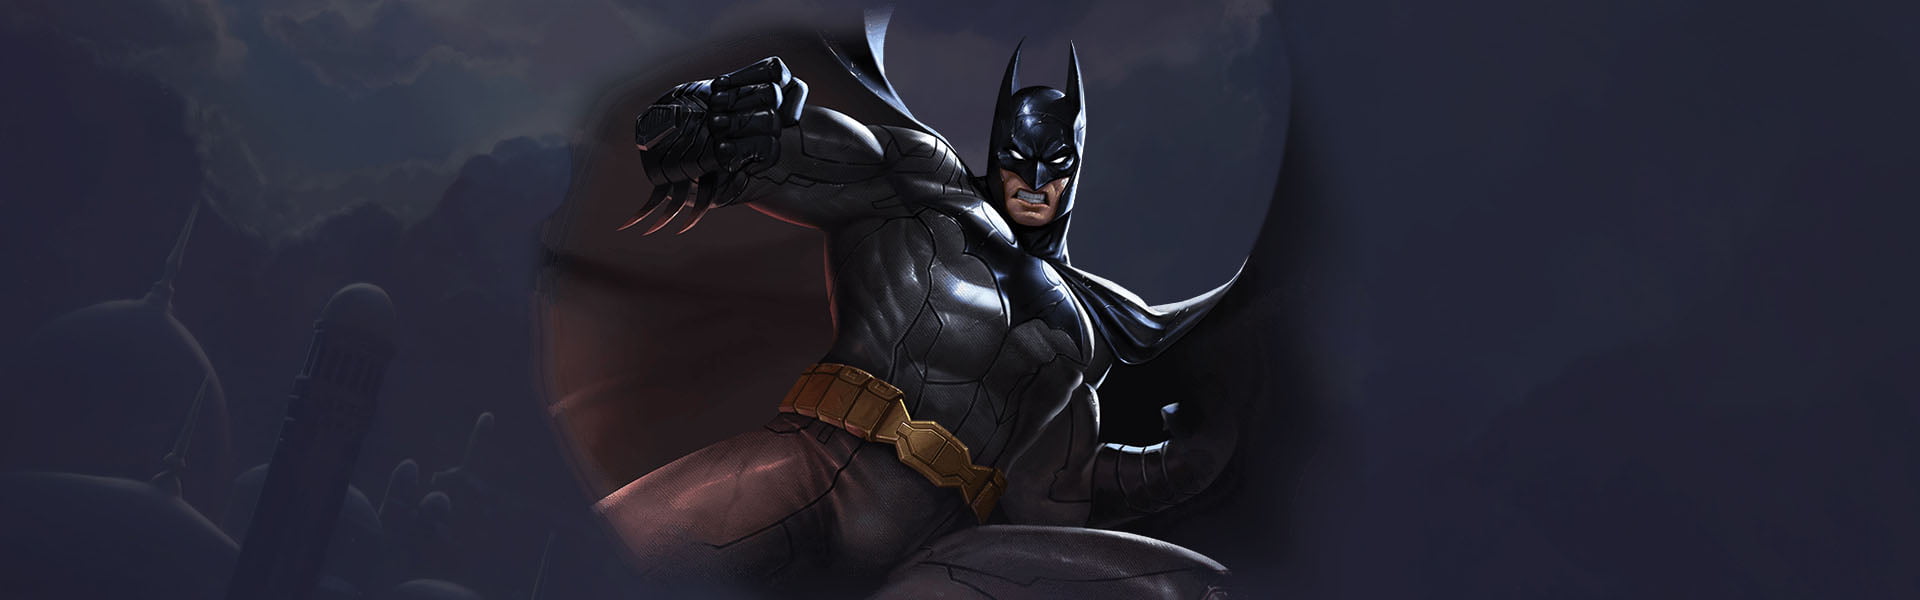 Batman Revealed As Free Hero in Arena of Valor 21